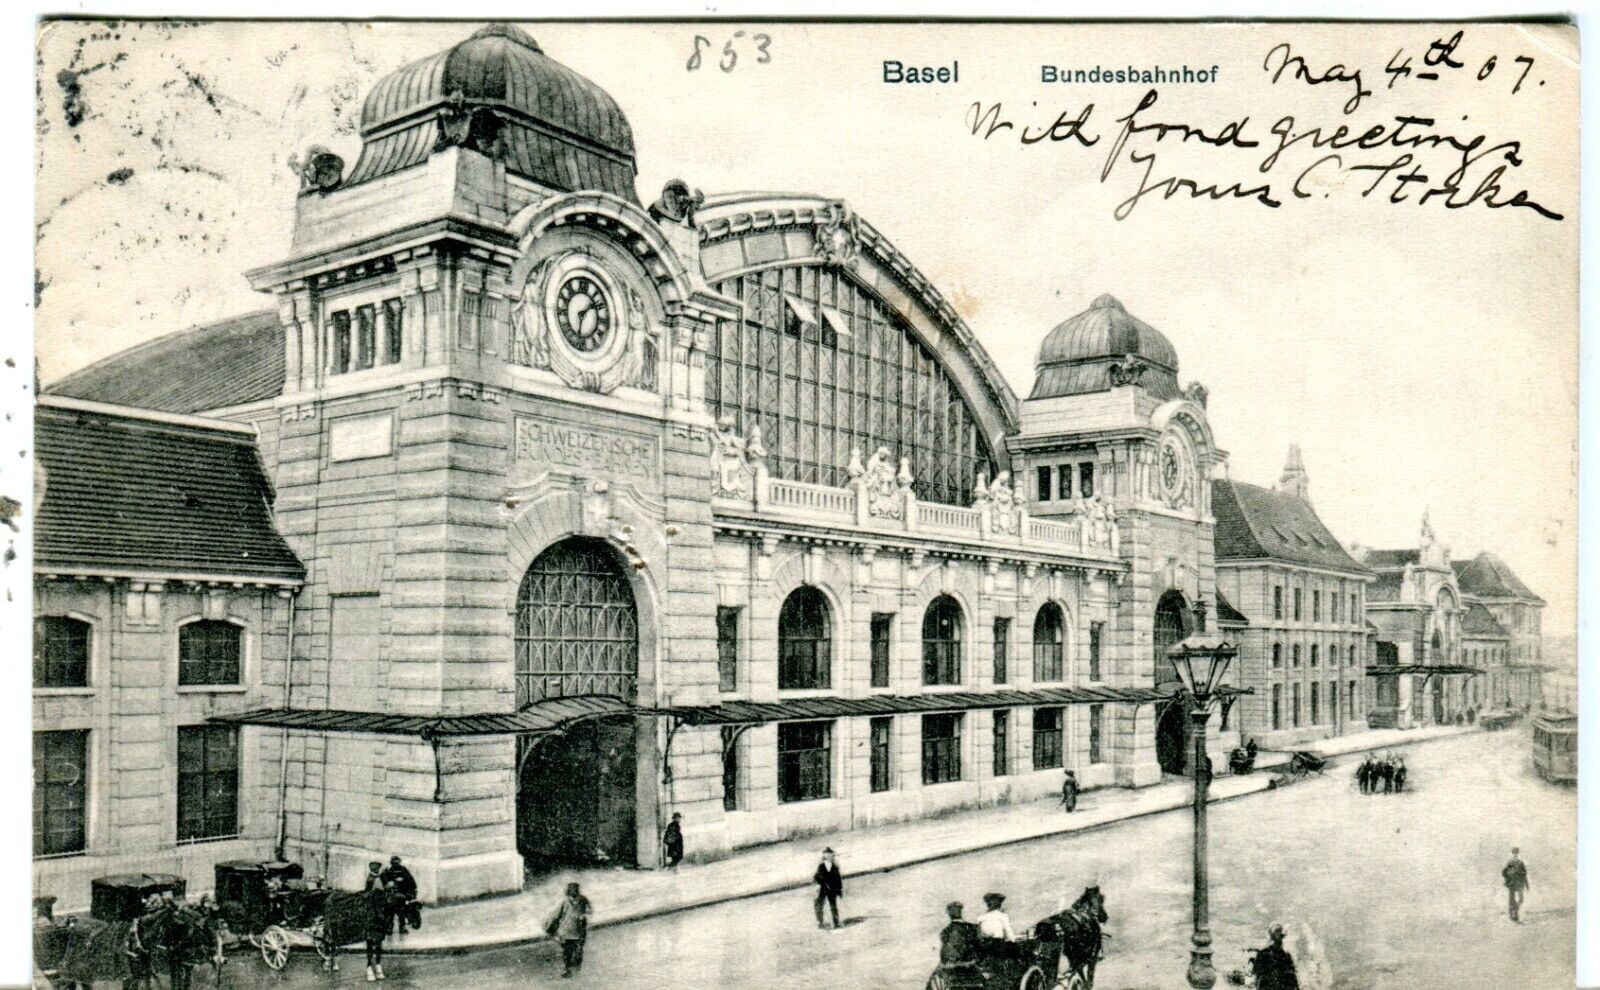 Switzerland Basel - Bundesbahnhof 1907 cover to NYC NY USA on postcard